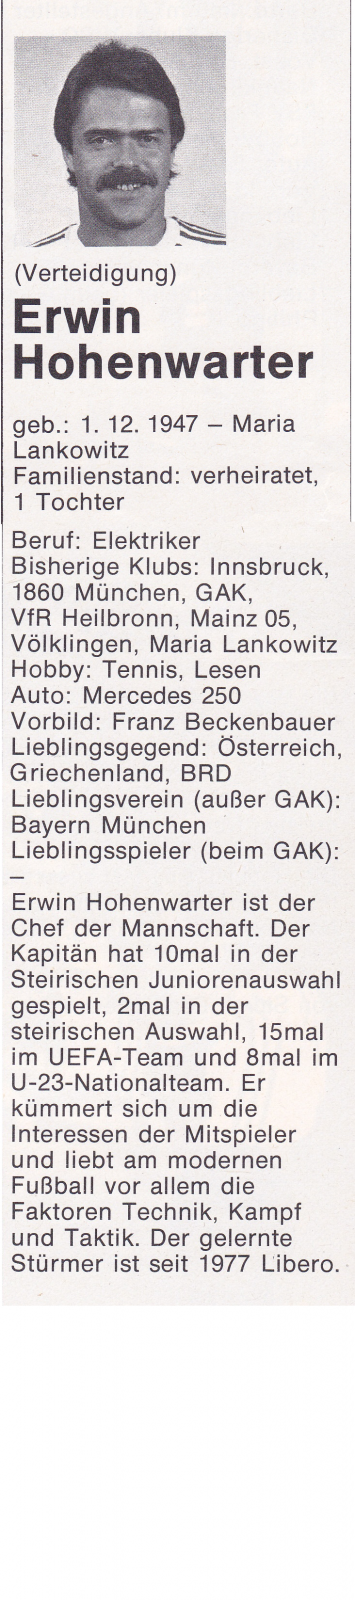 Hohenwarter 1981.png